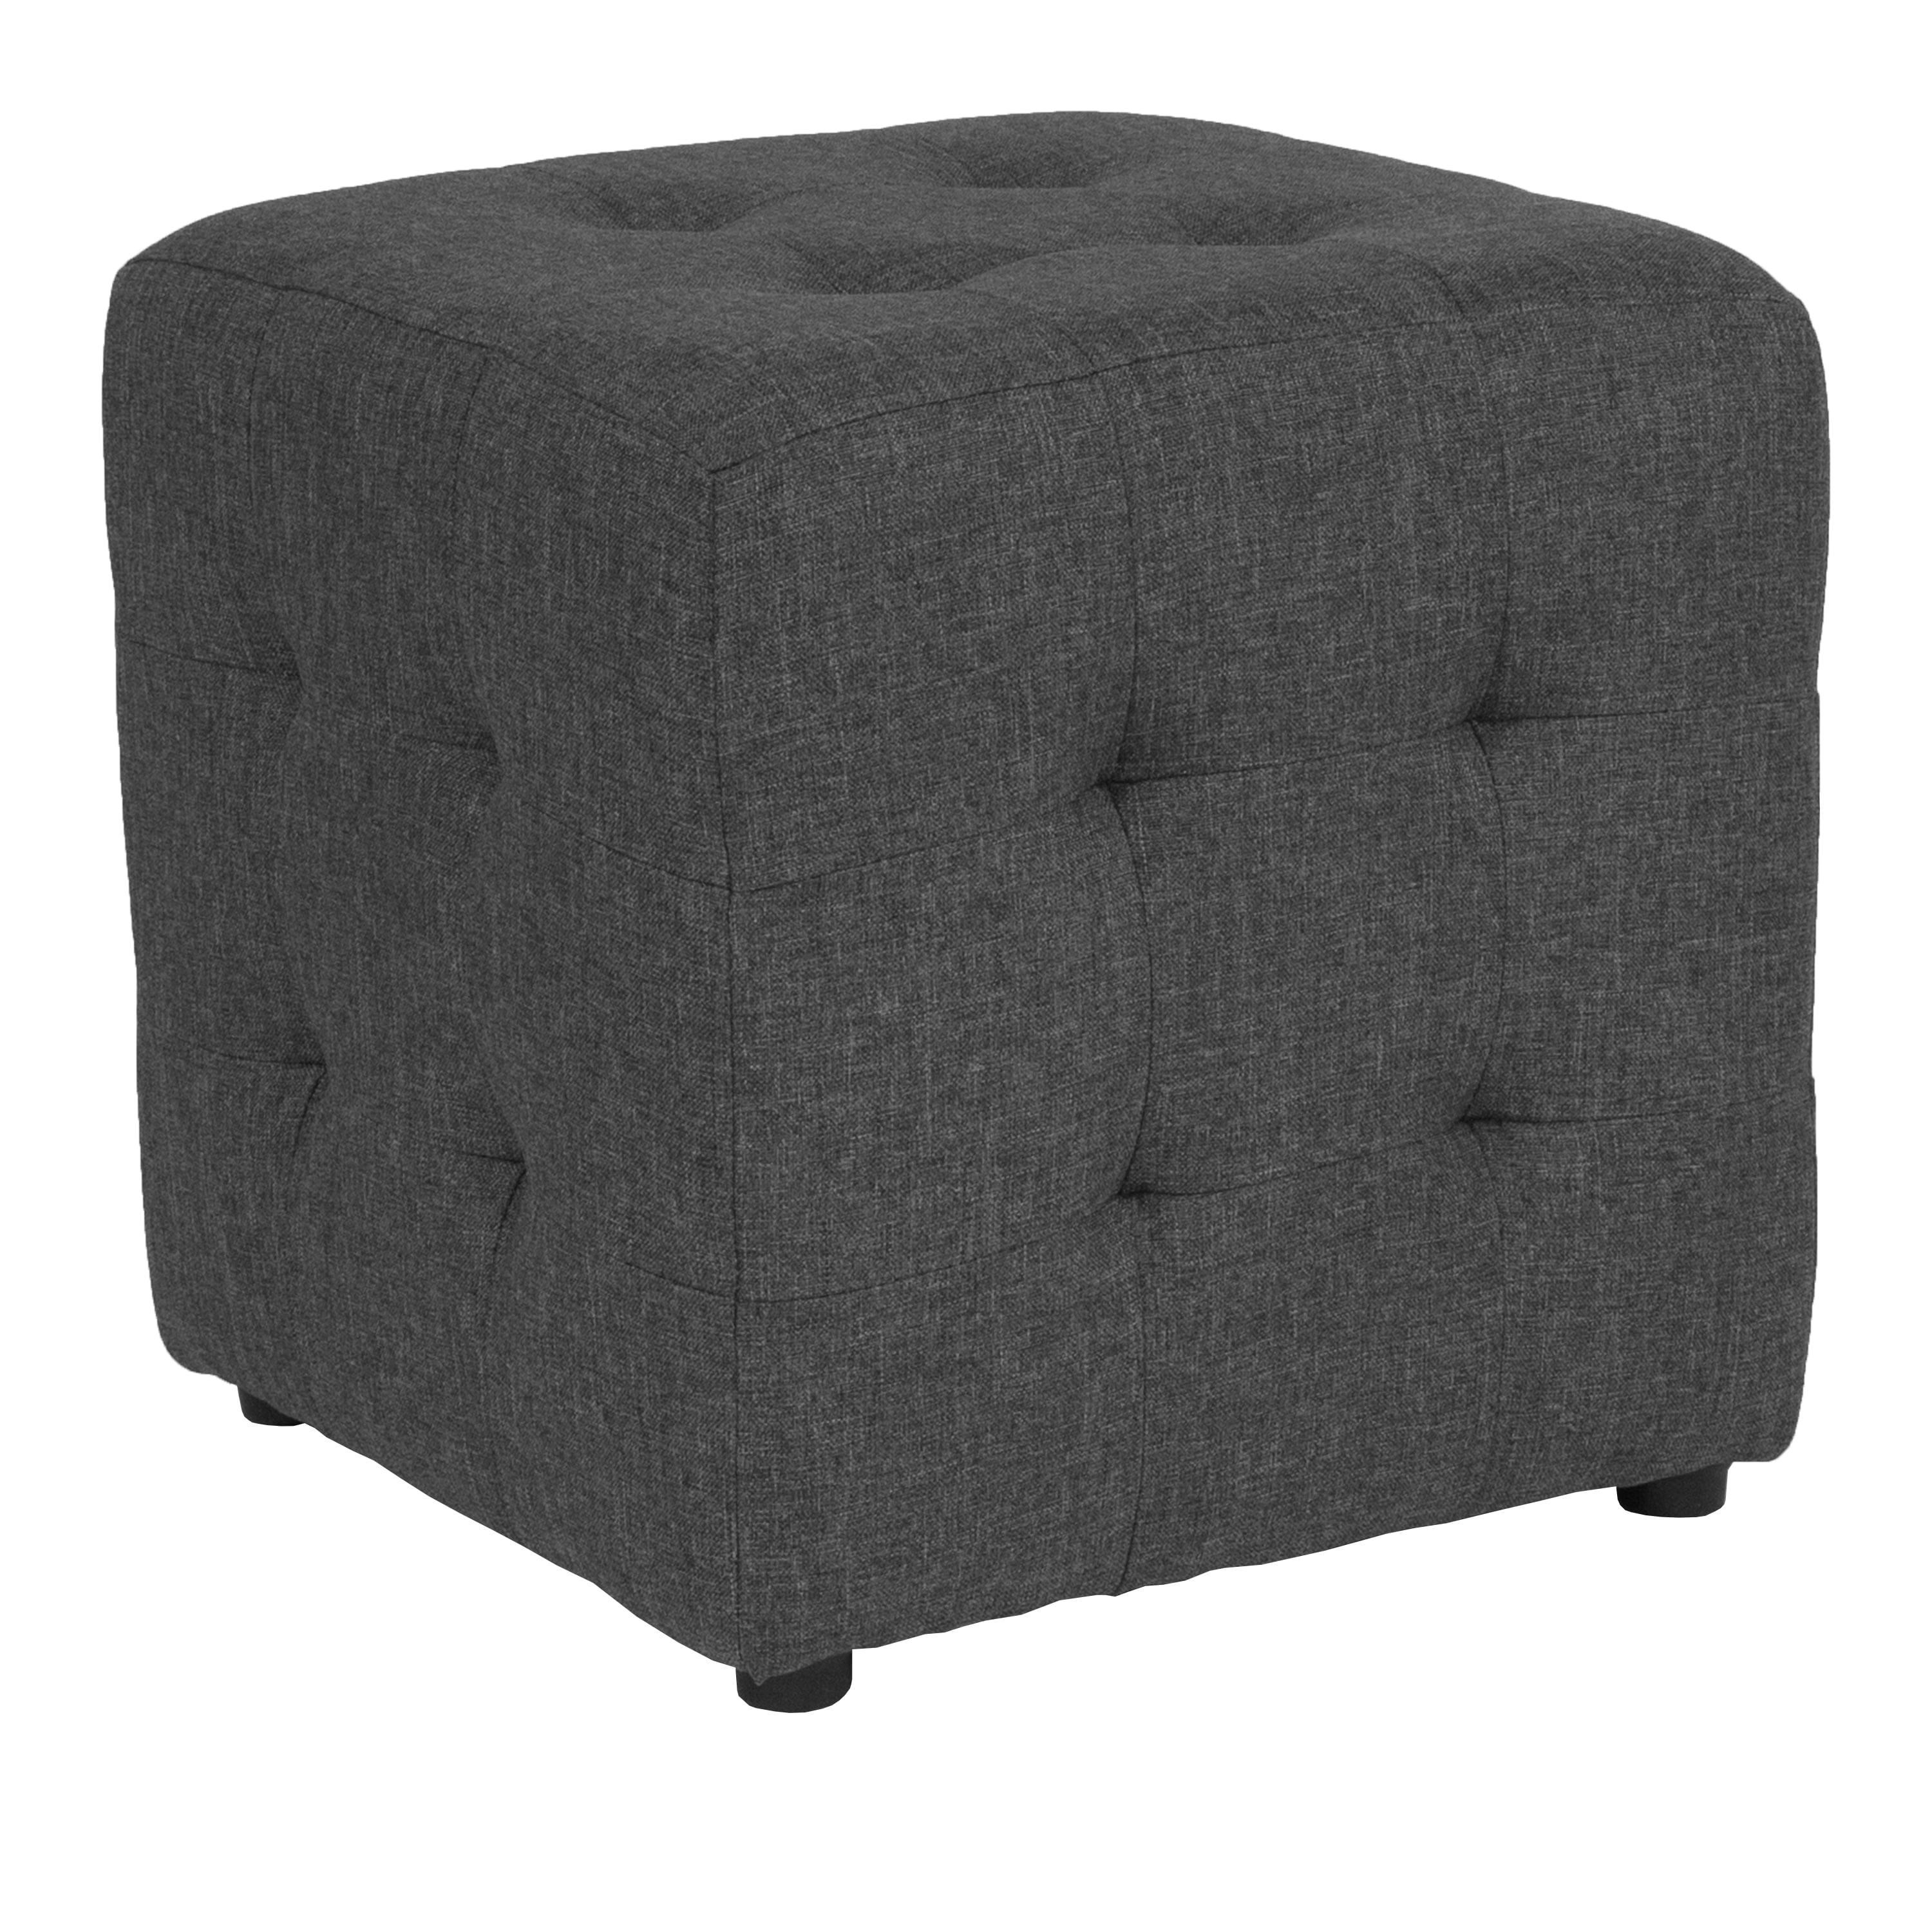 Avendale 16'' Square Dark Gray Tufted Upholstered Pouf